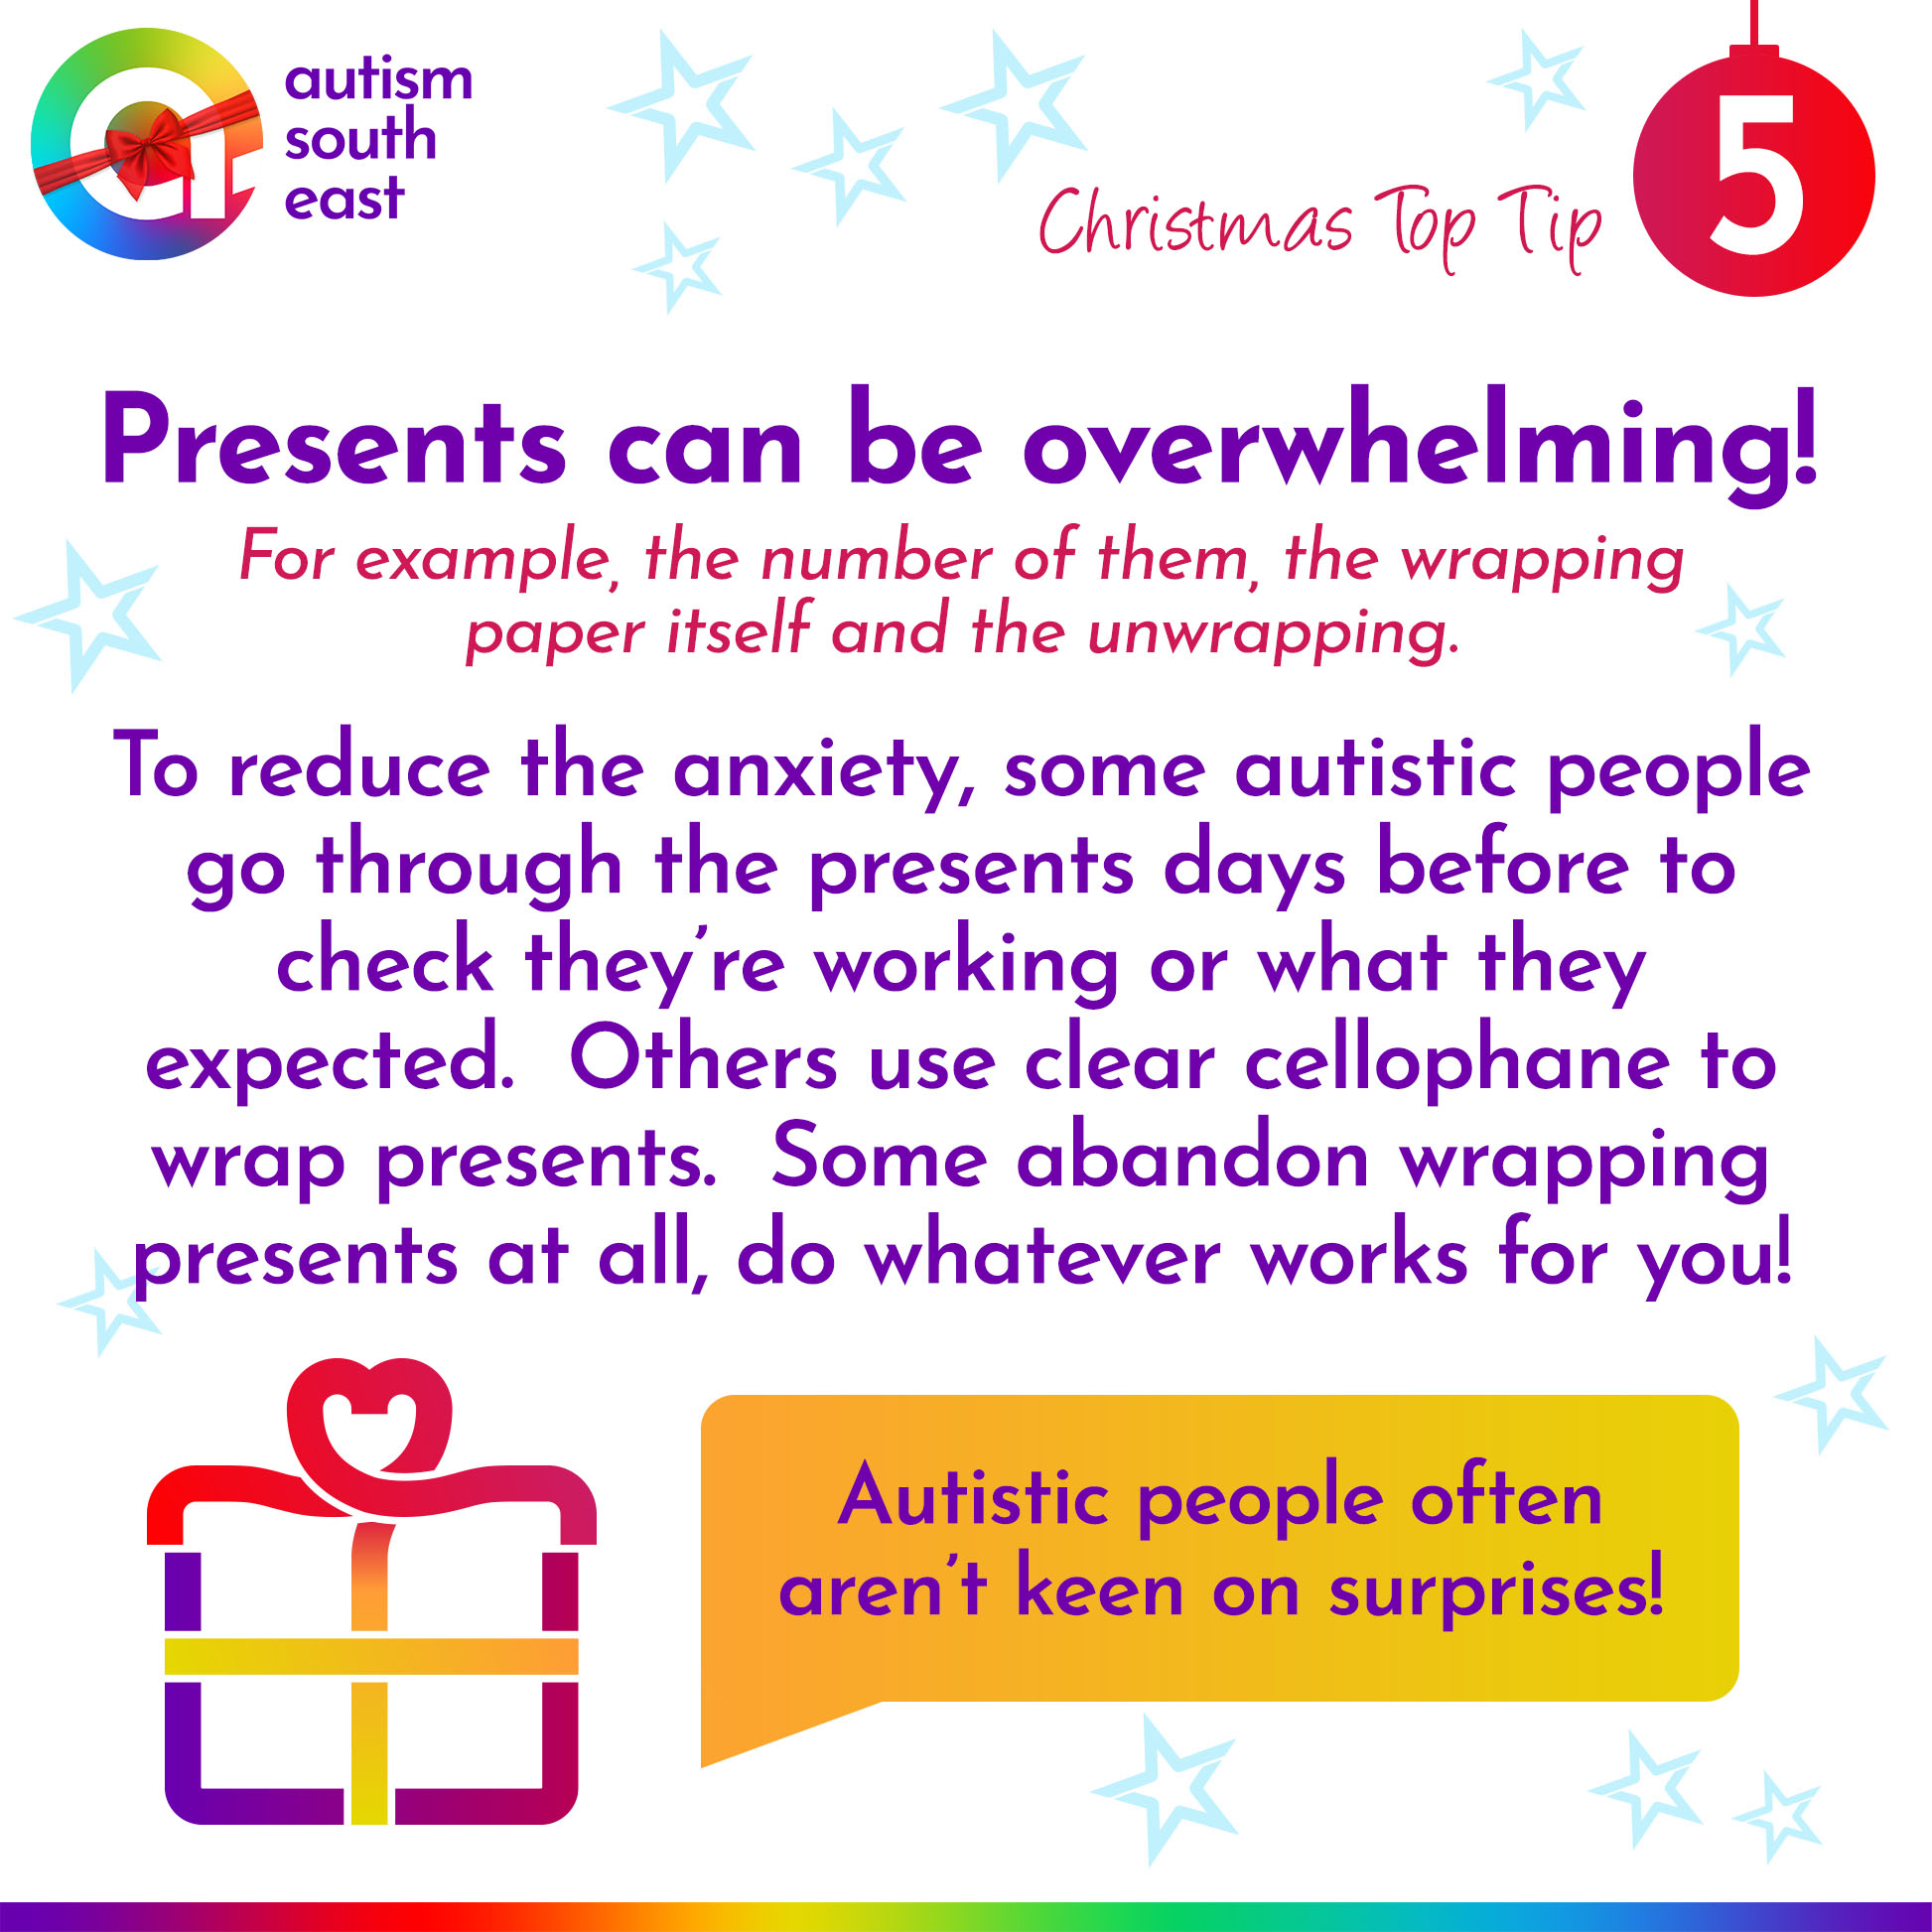 thanks for the idea @Yvaannö #autism #autismcreature #yippee